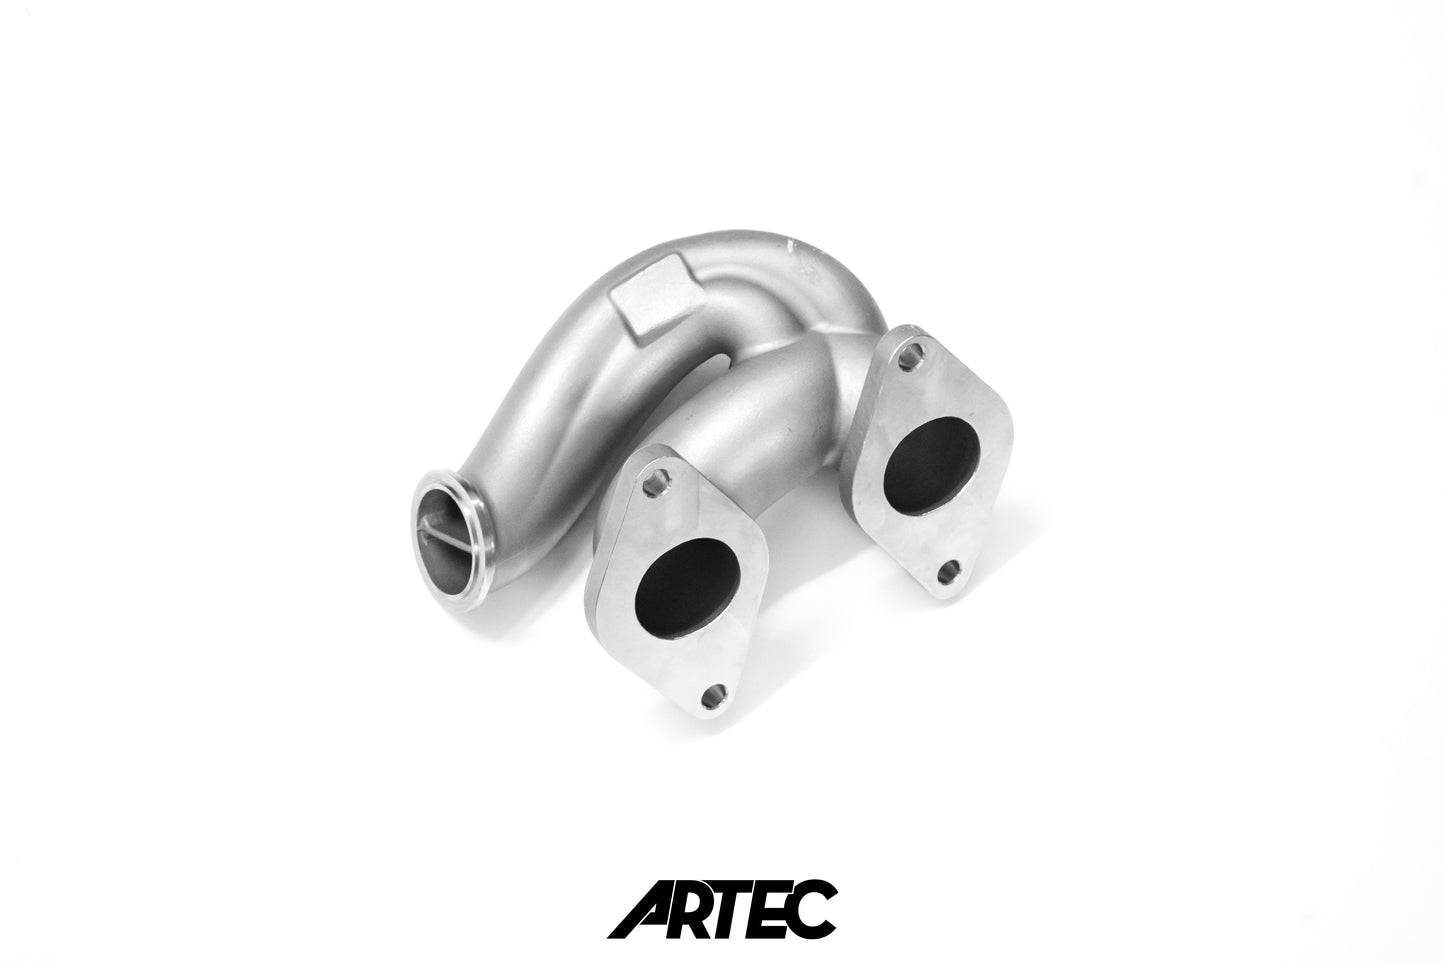 Artec Mazda 13B V-Band Turbo Exhaust Manifold (preorder)